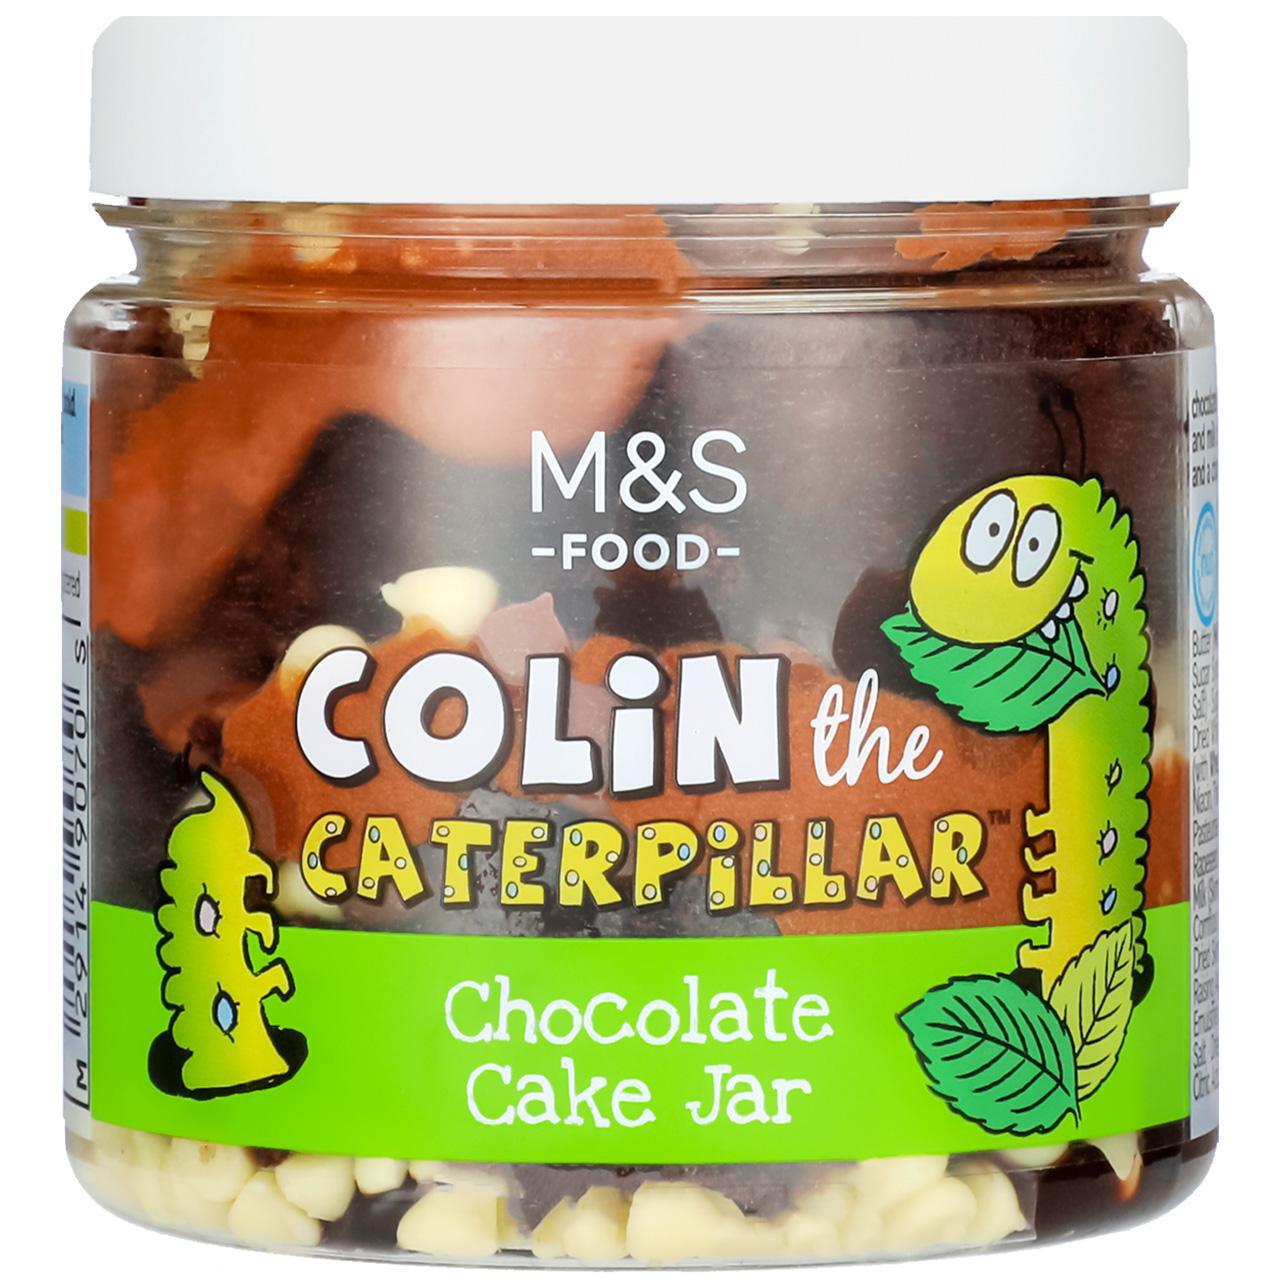 M&S Colin the Caterpillar Cake Jar 160g